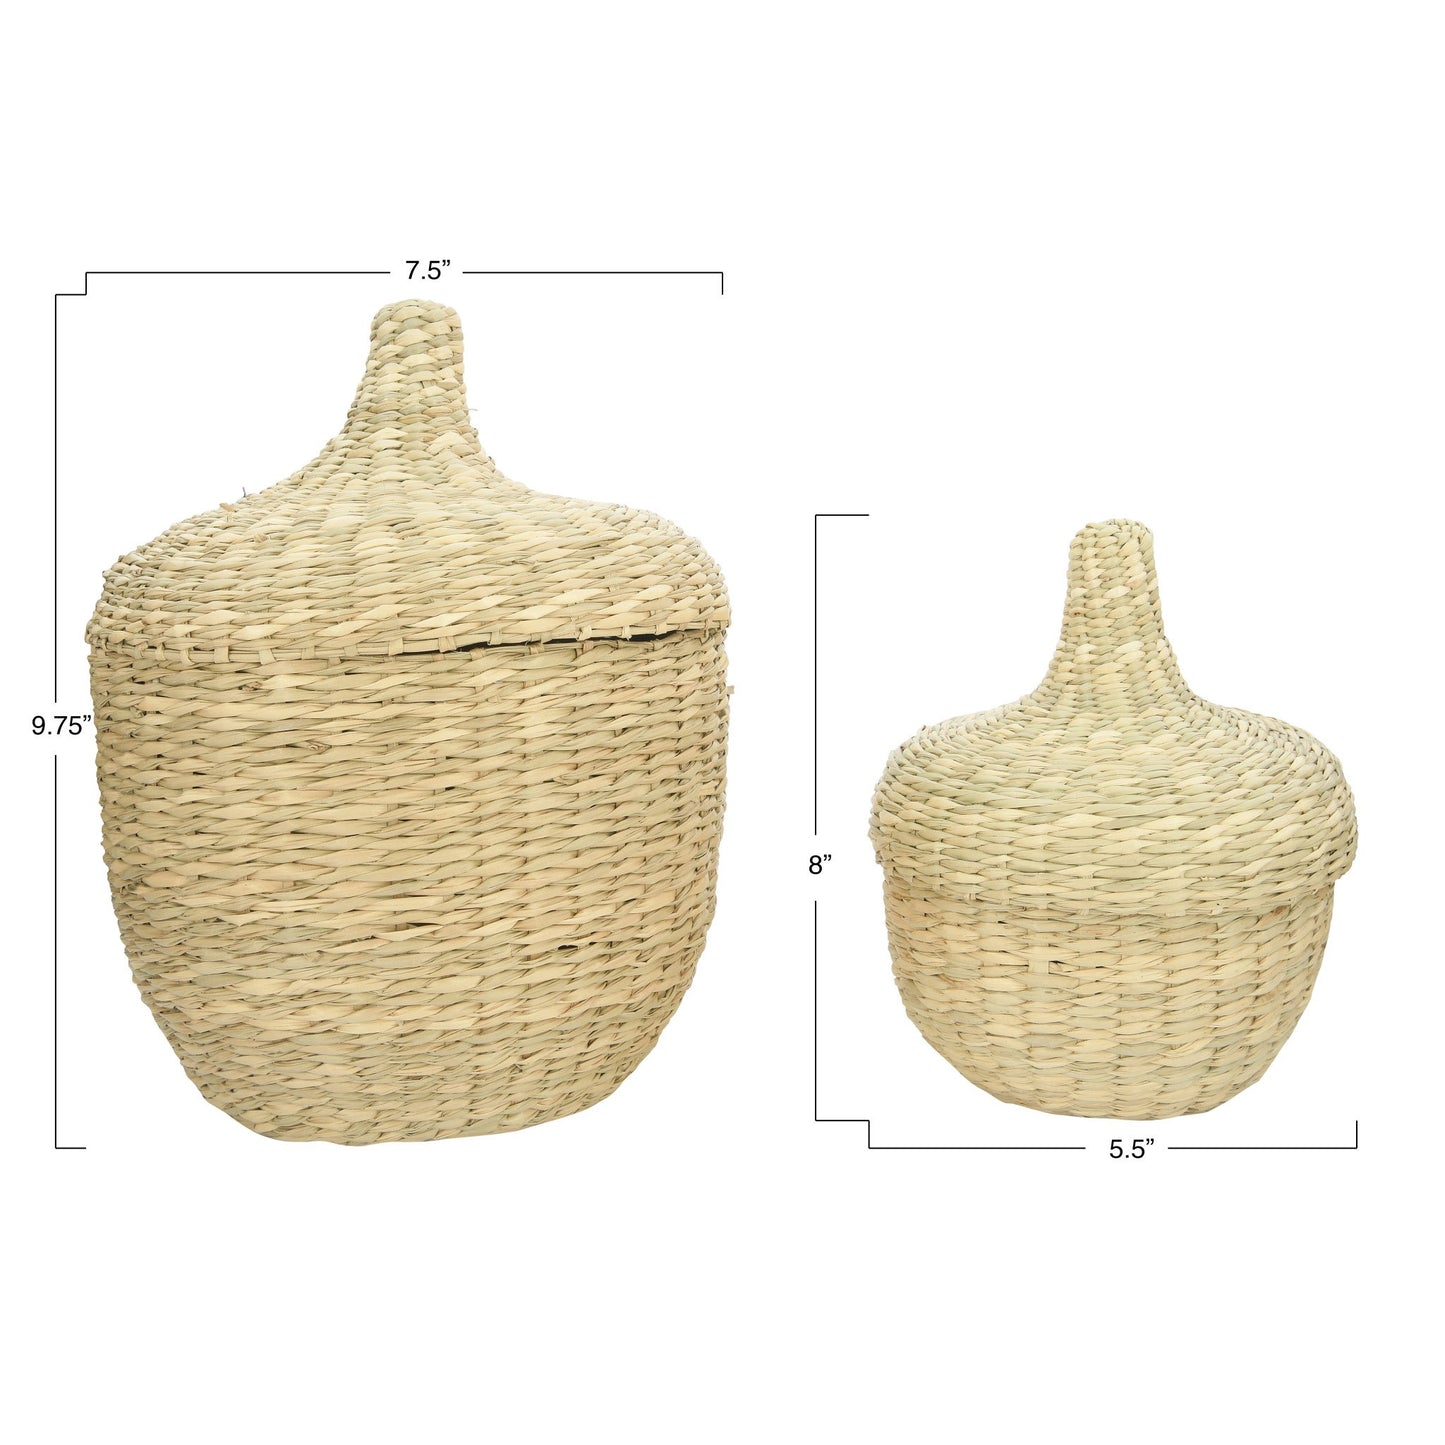 Handwoven Seagrass Baskets